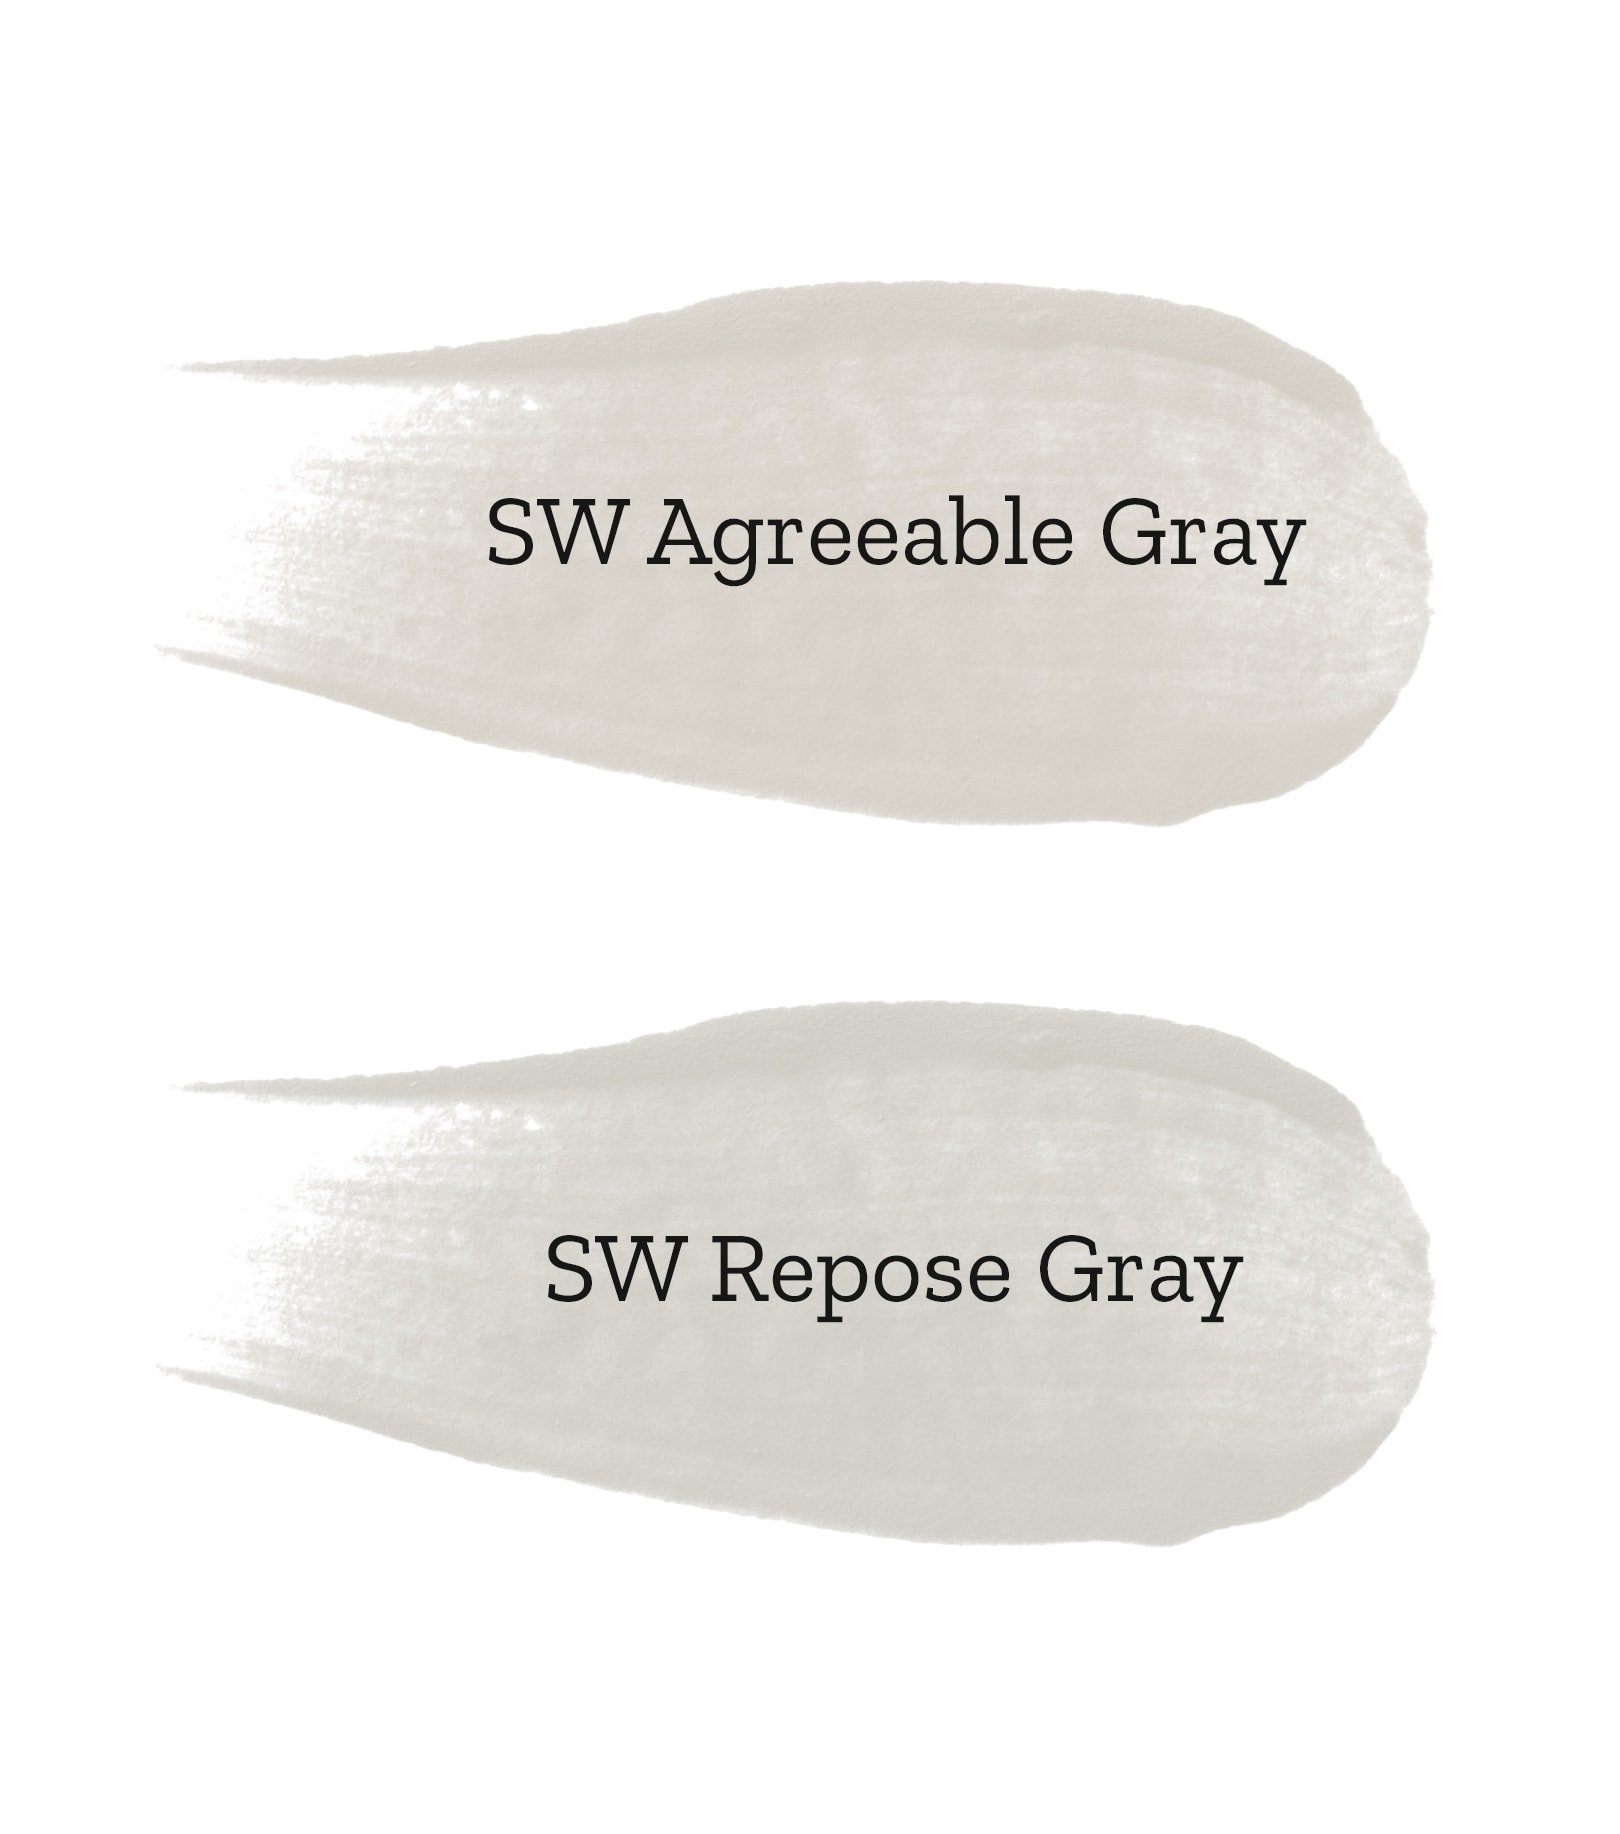 agreeable gray vs repose gray